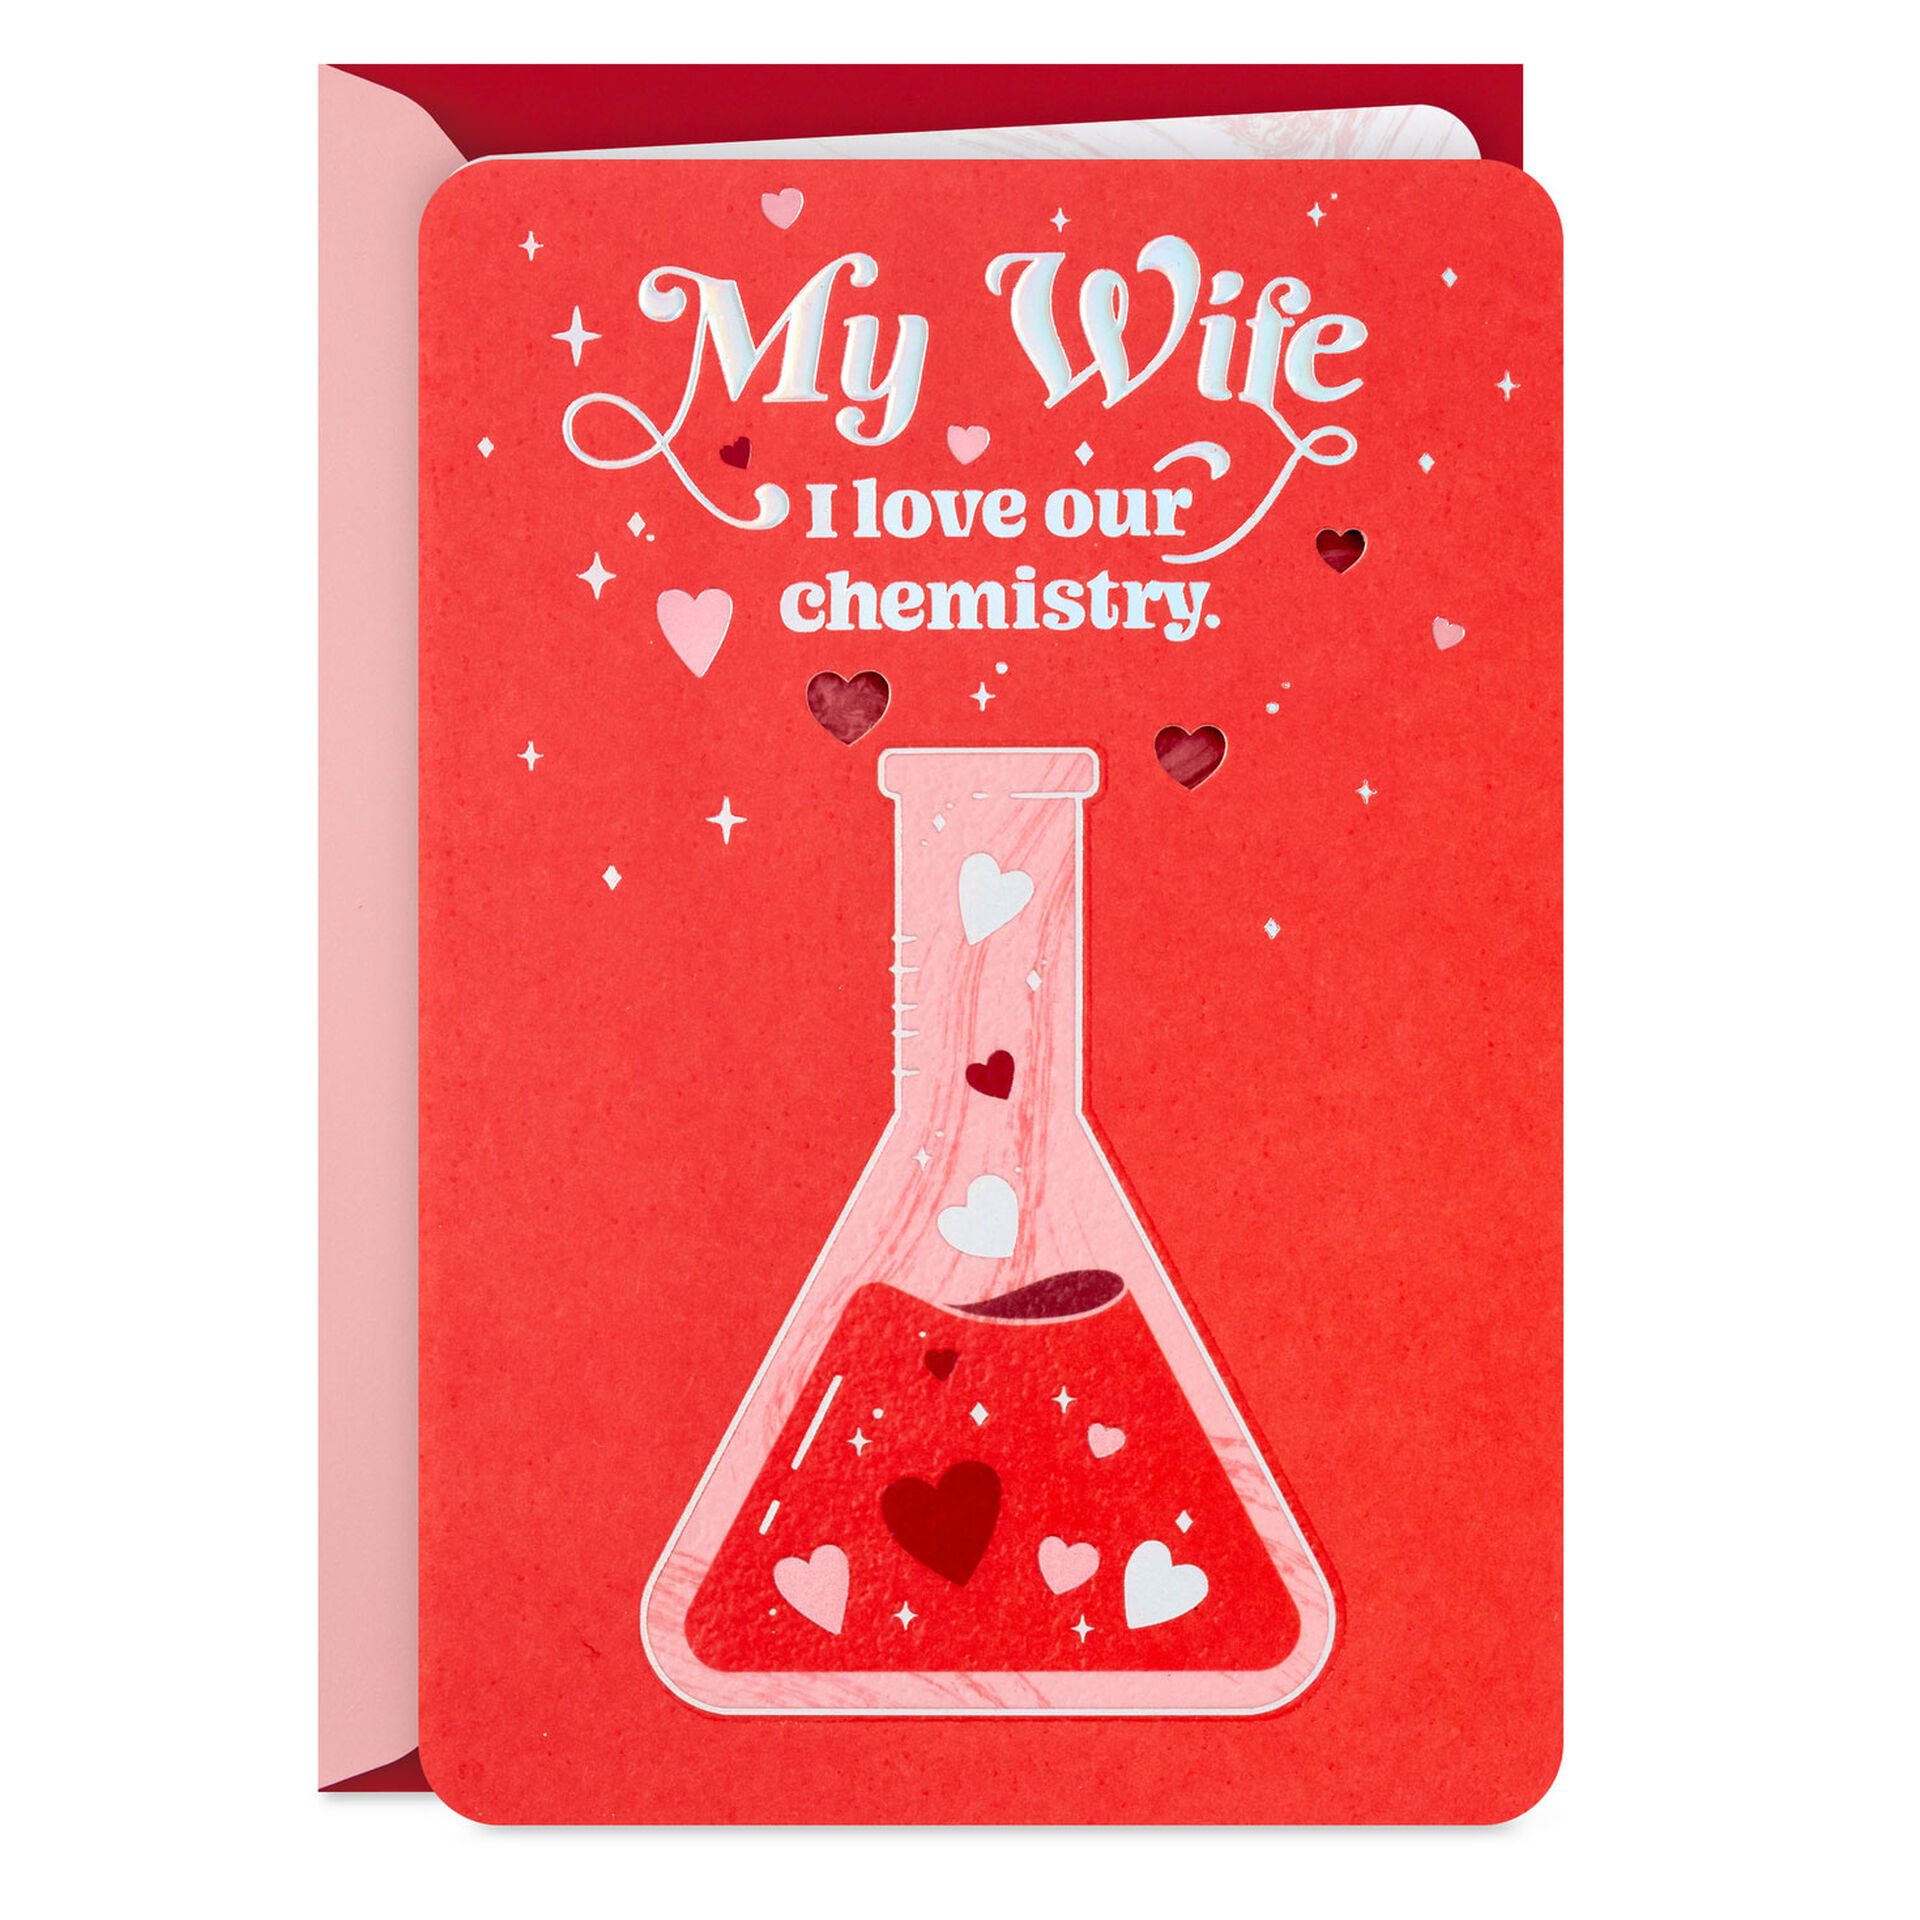 Love-Our-Chemistry-Hearts-in-Beaker-Wife-Love-Card_559VEE9089_01